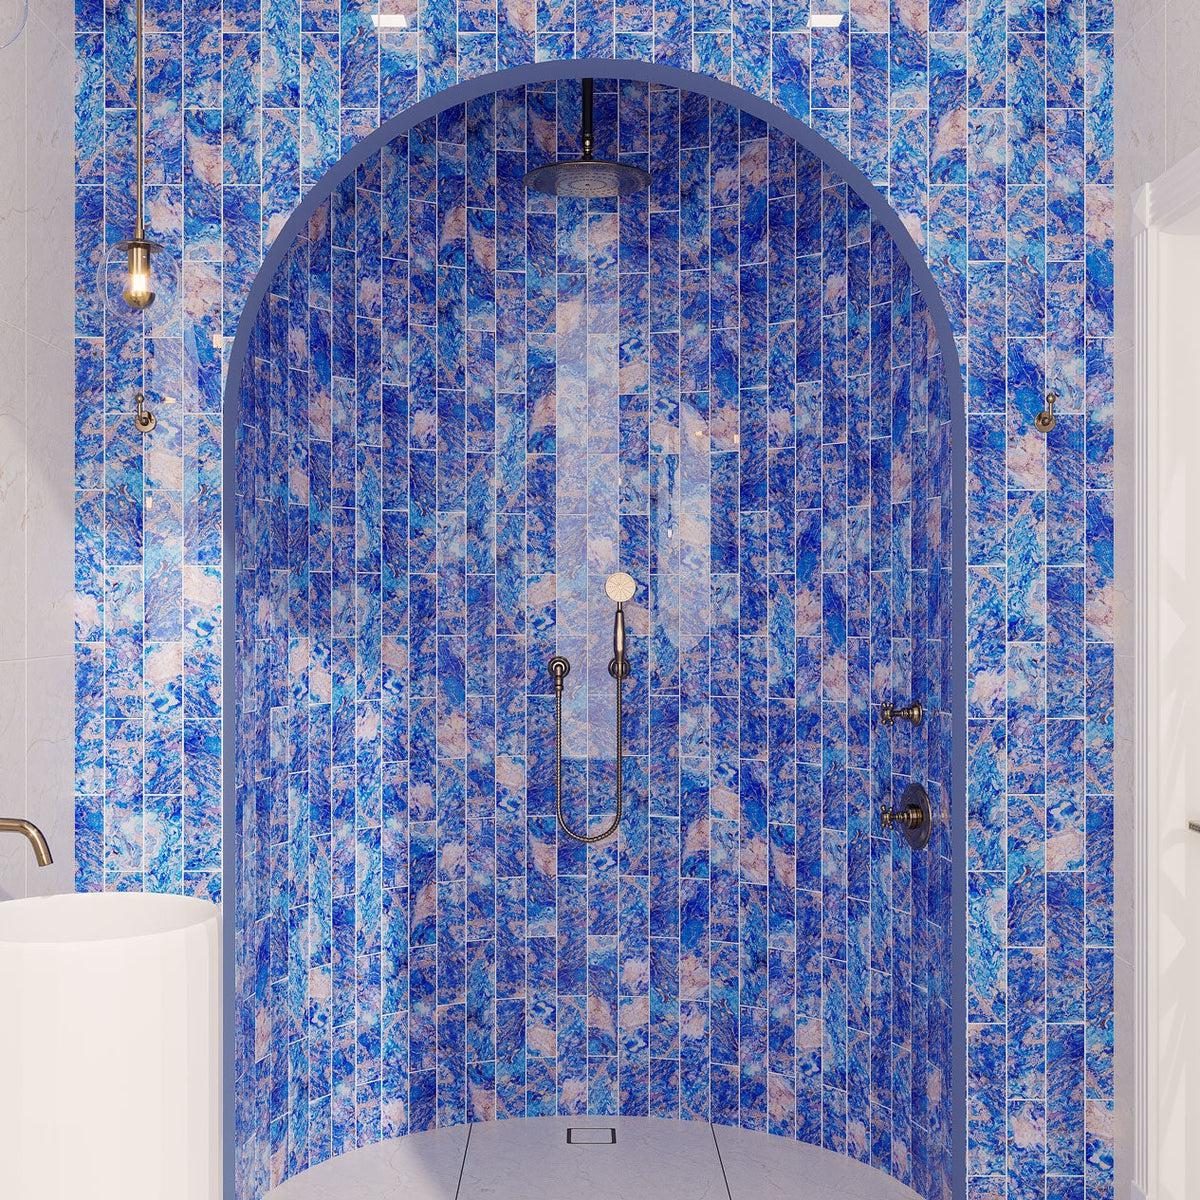 Gemstone blue glass subway bathroom tile